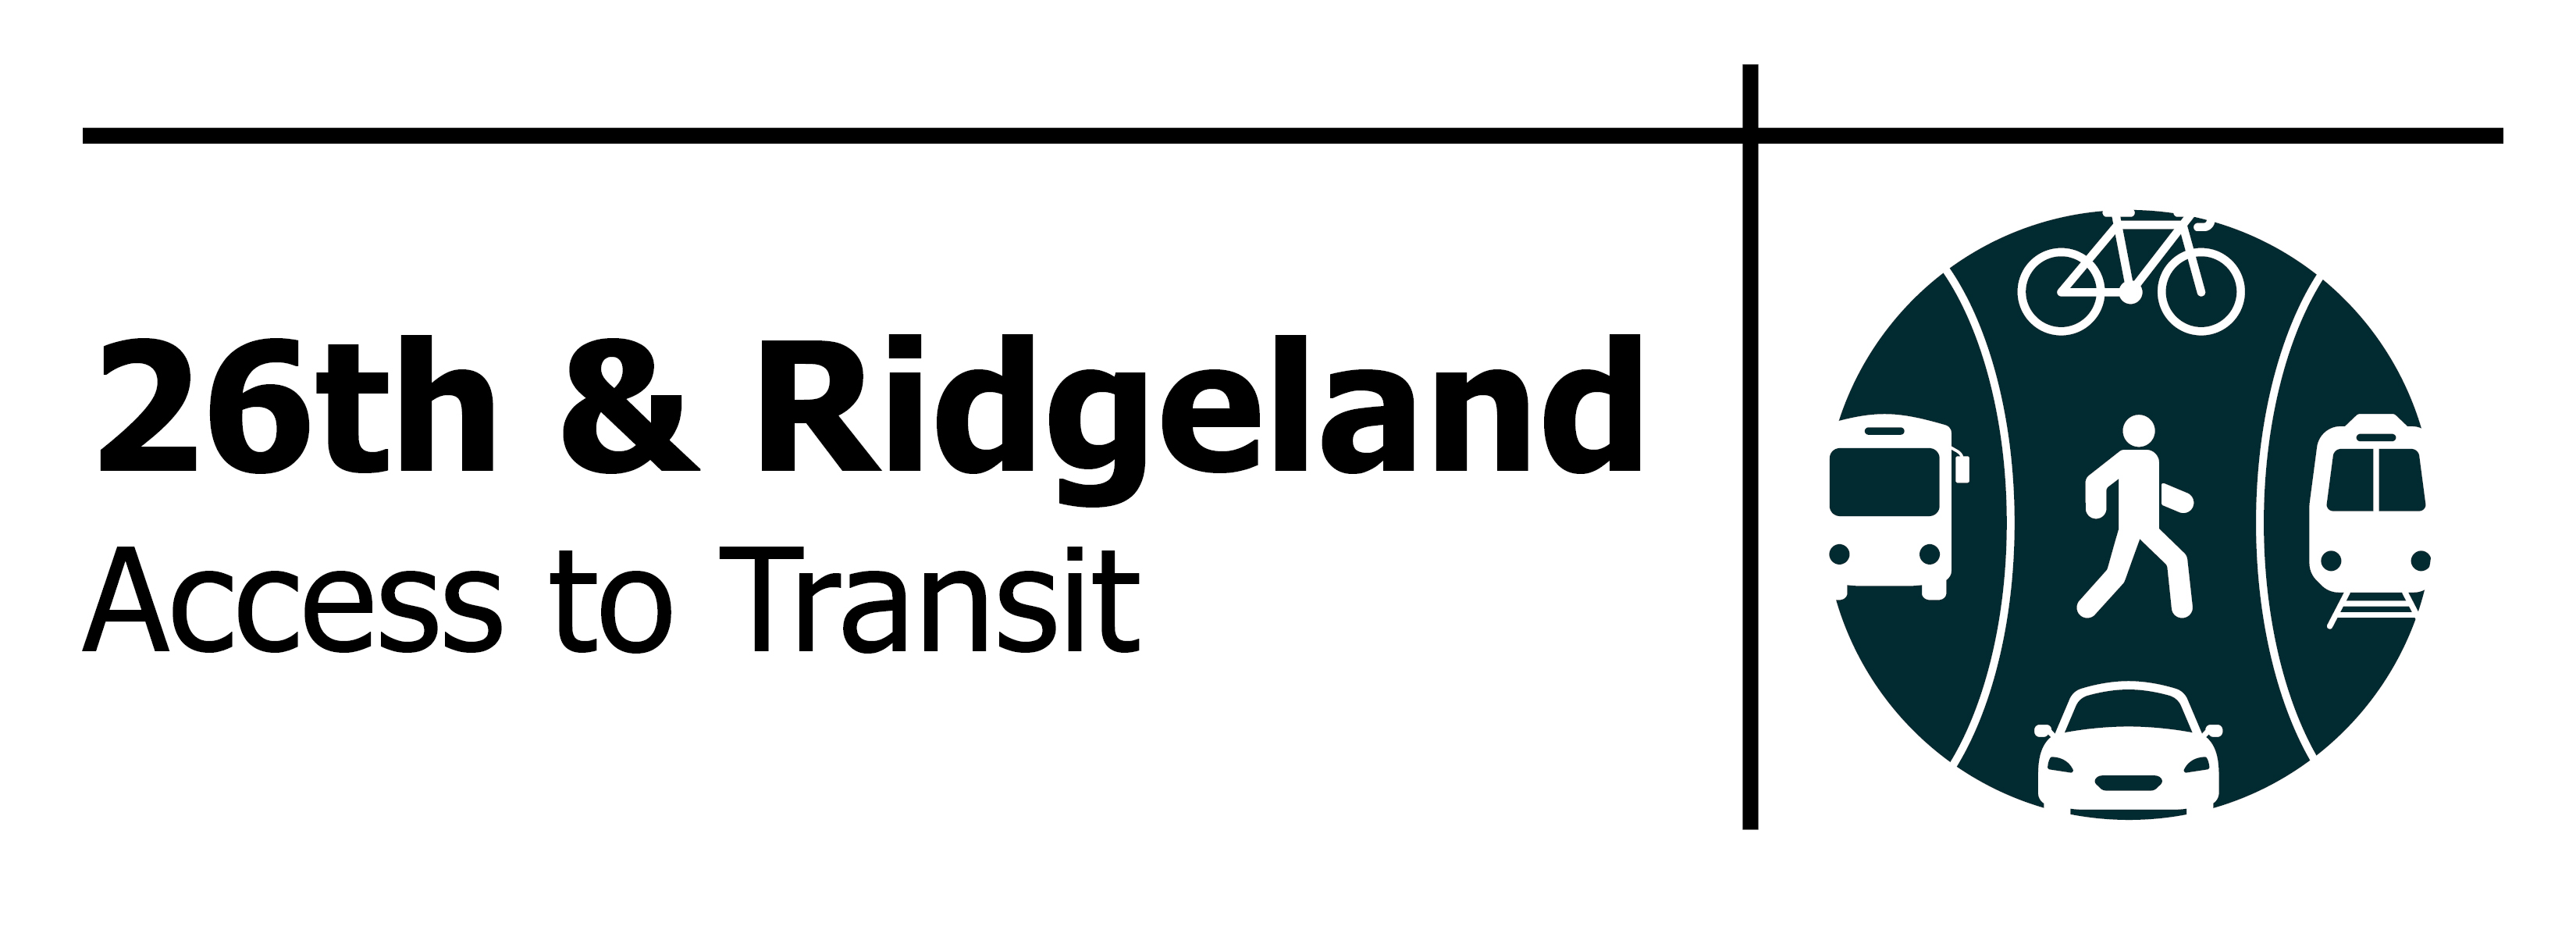 26th & Ridgeland Access to Transit